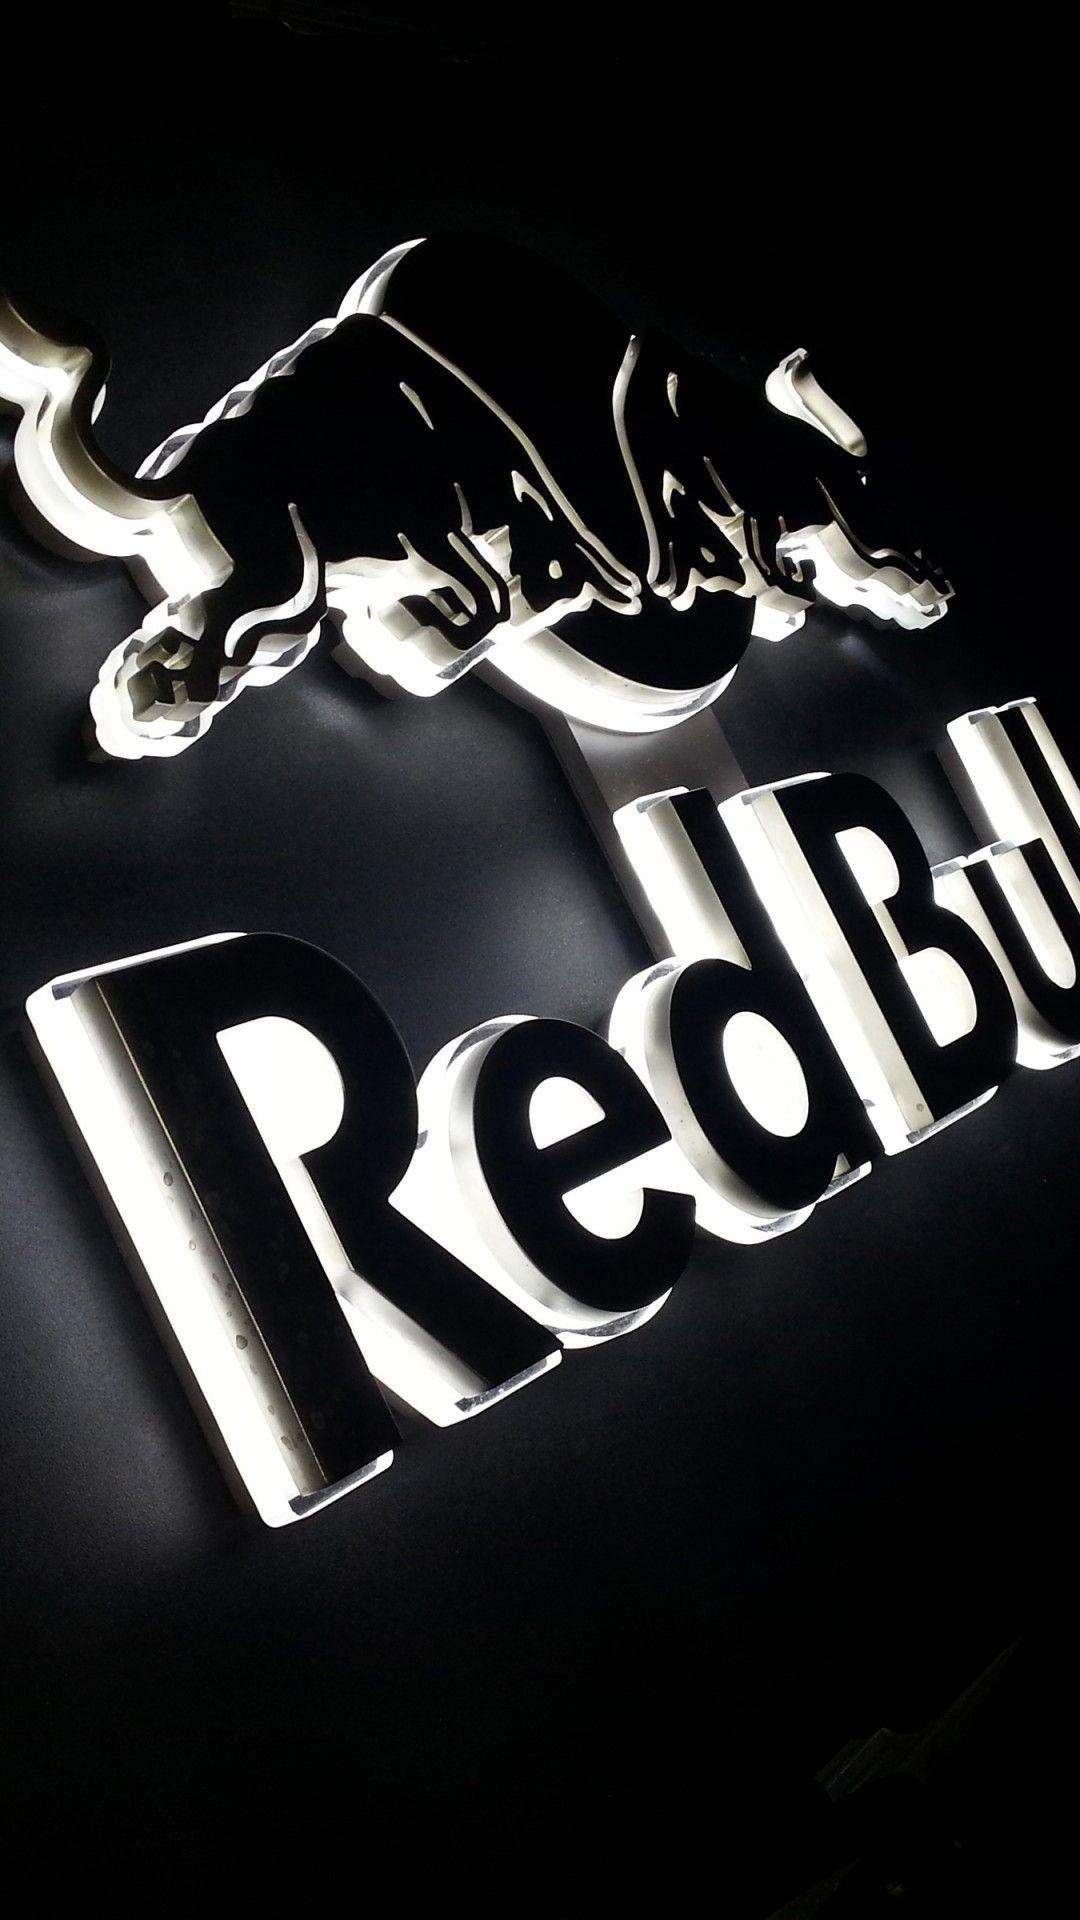 Red Bull Logo Hd Mobile Wallpapers Wallpaper Cave